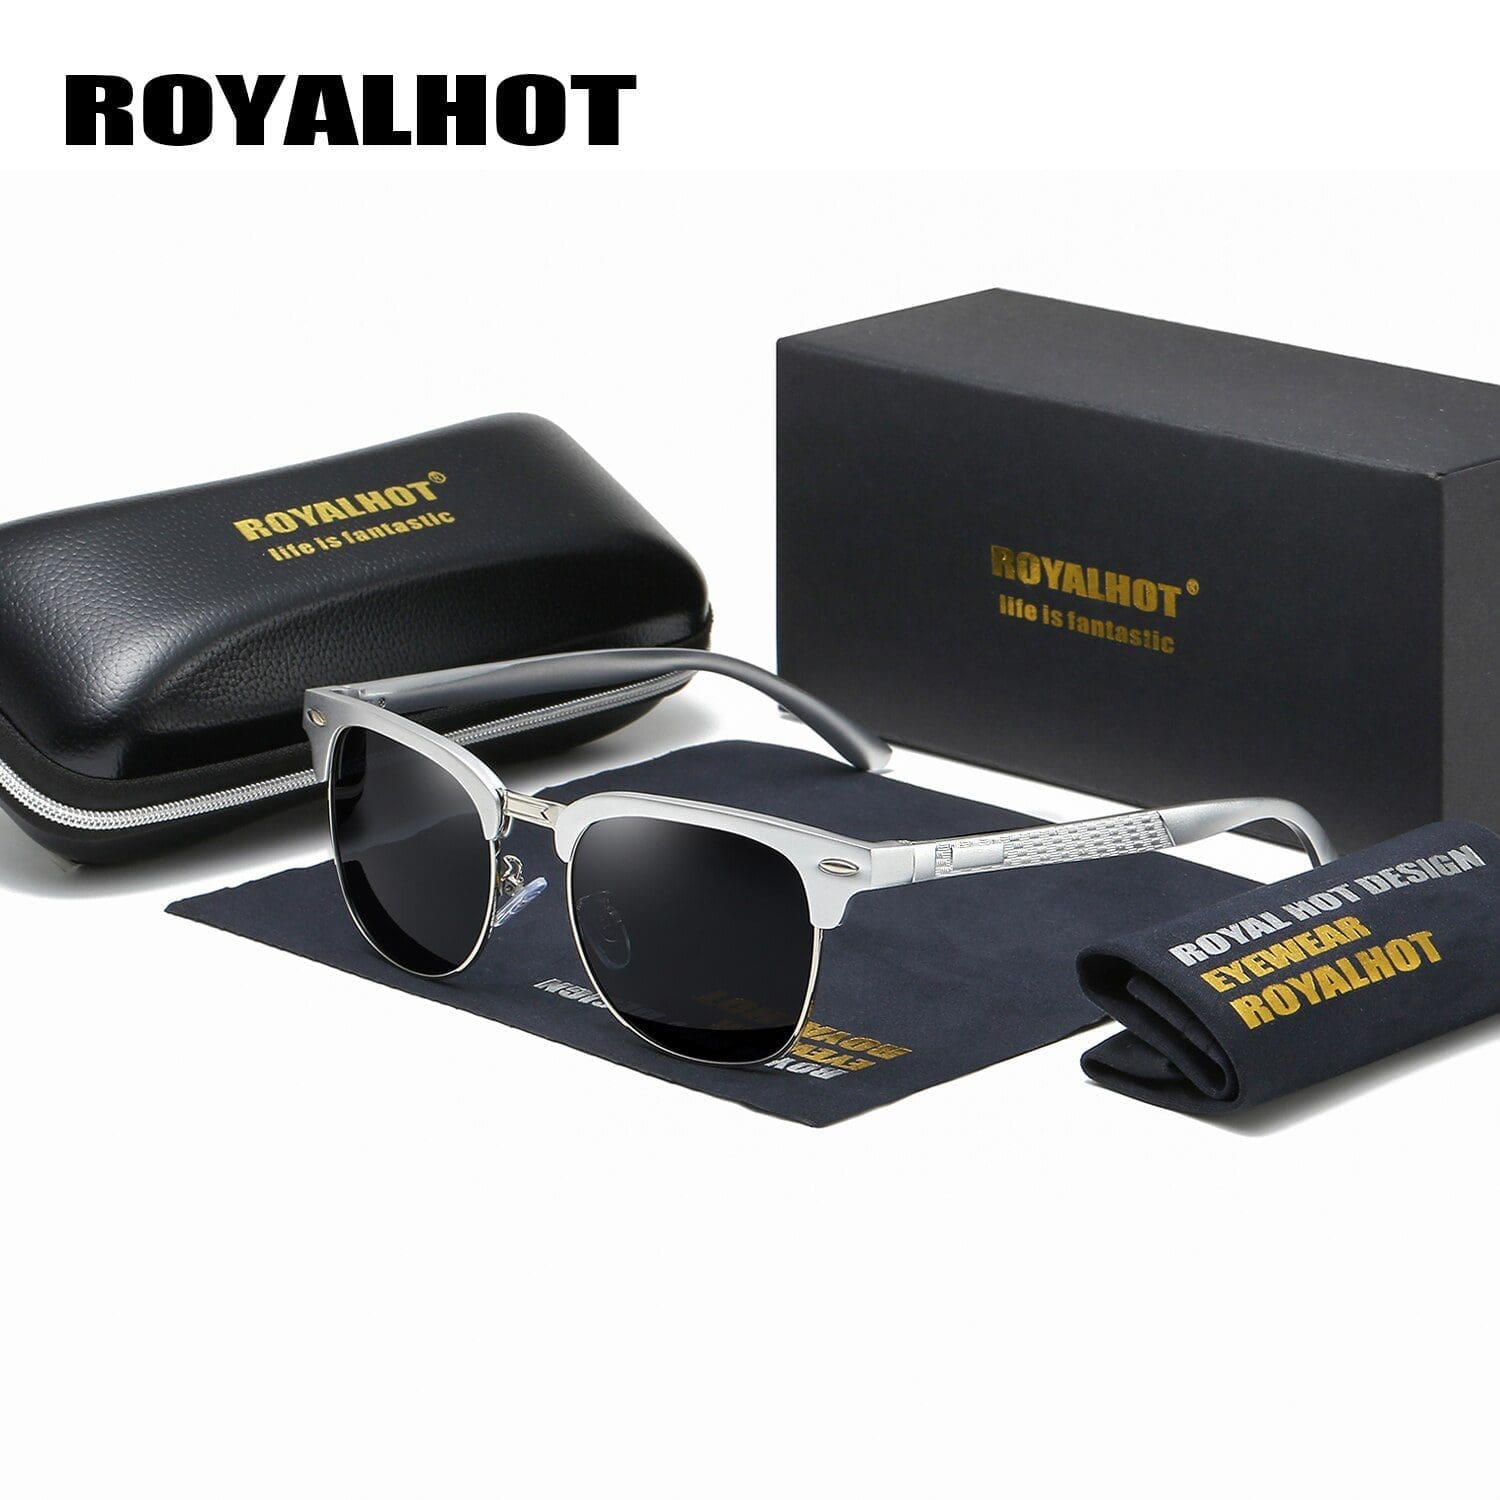 Royal Hot Polarized Aluminum Magnesium Half Frame Sunglasses 5